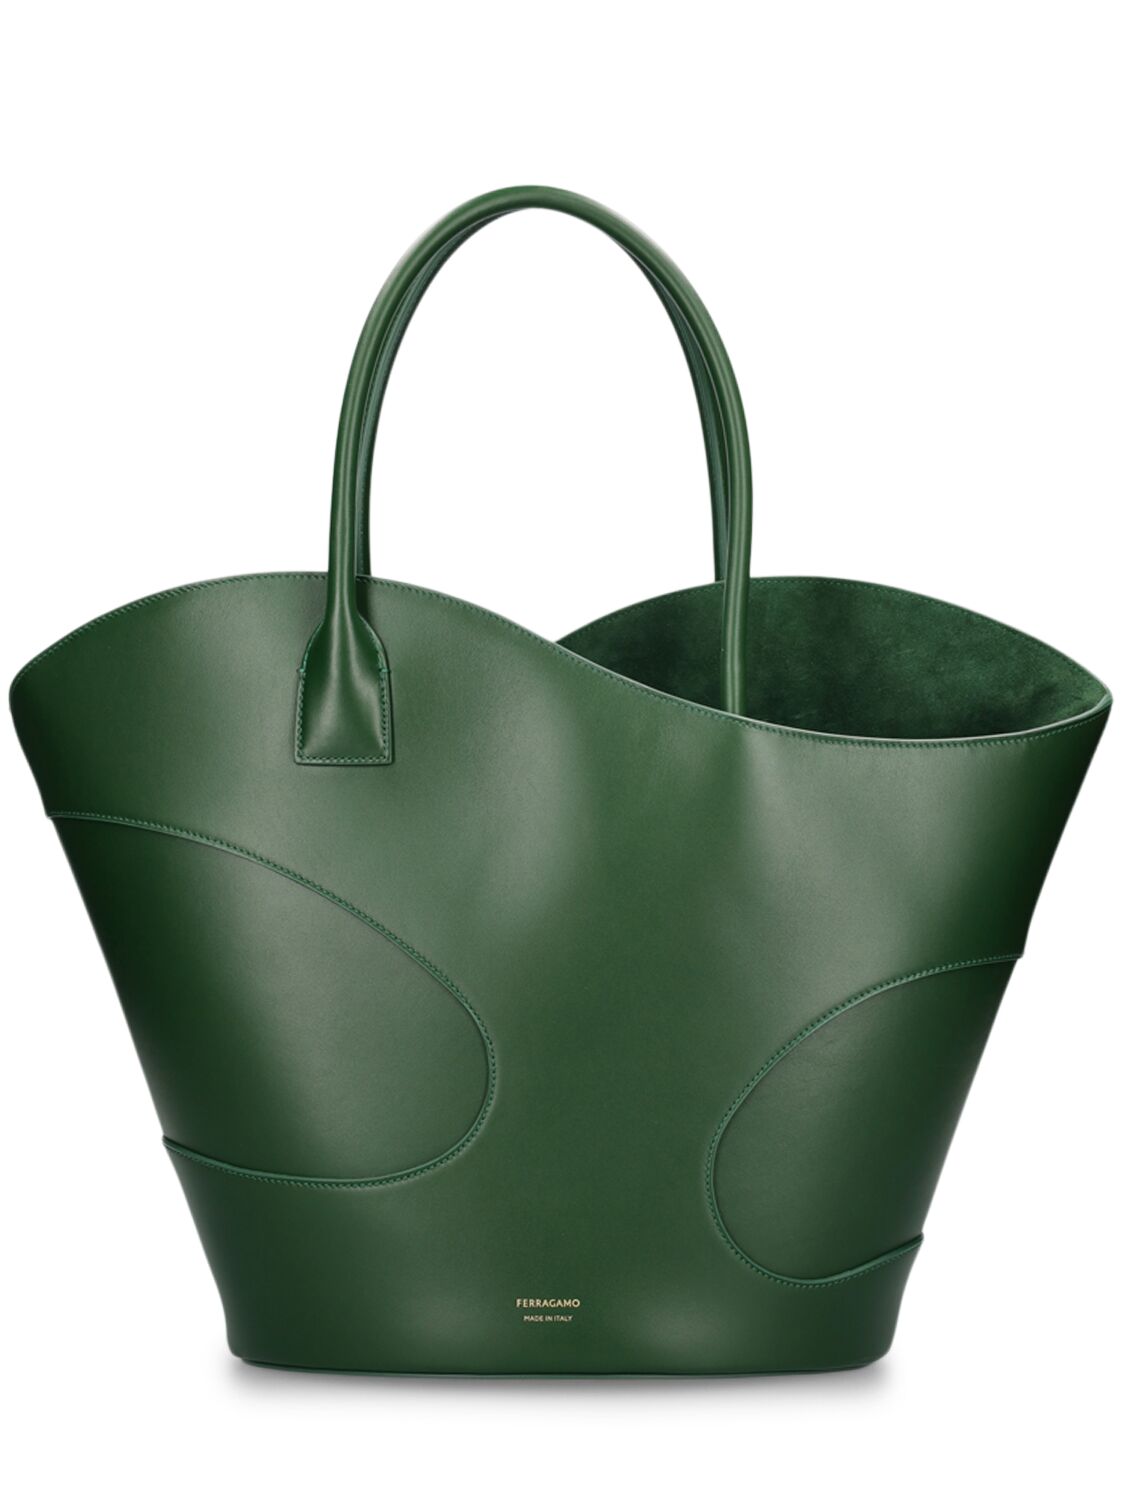 Ferragamo Cutout Leather Tote Bag In Green